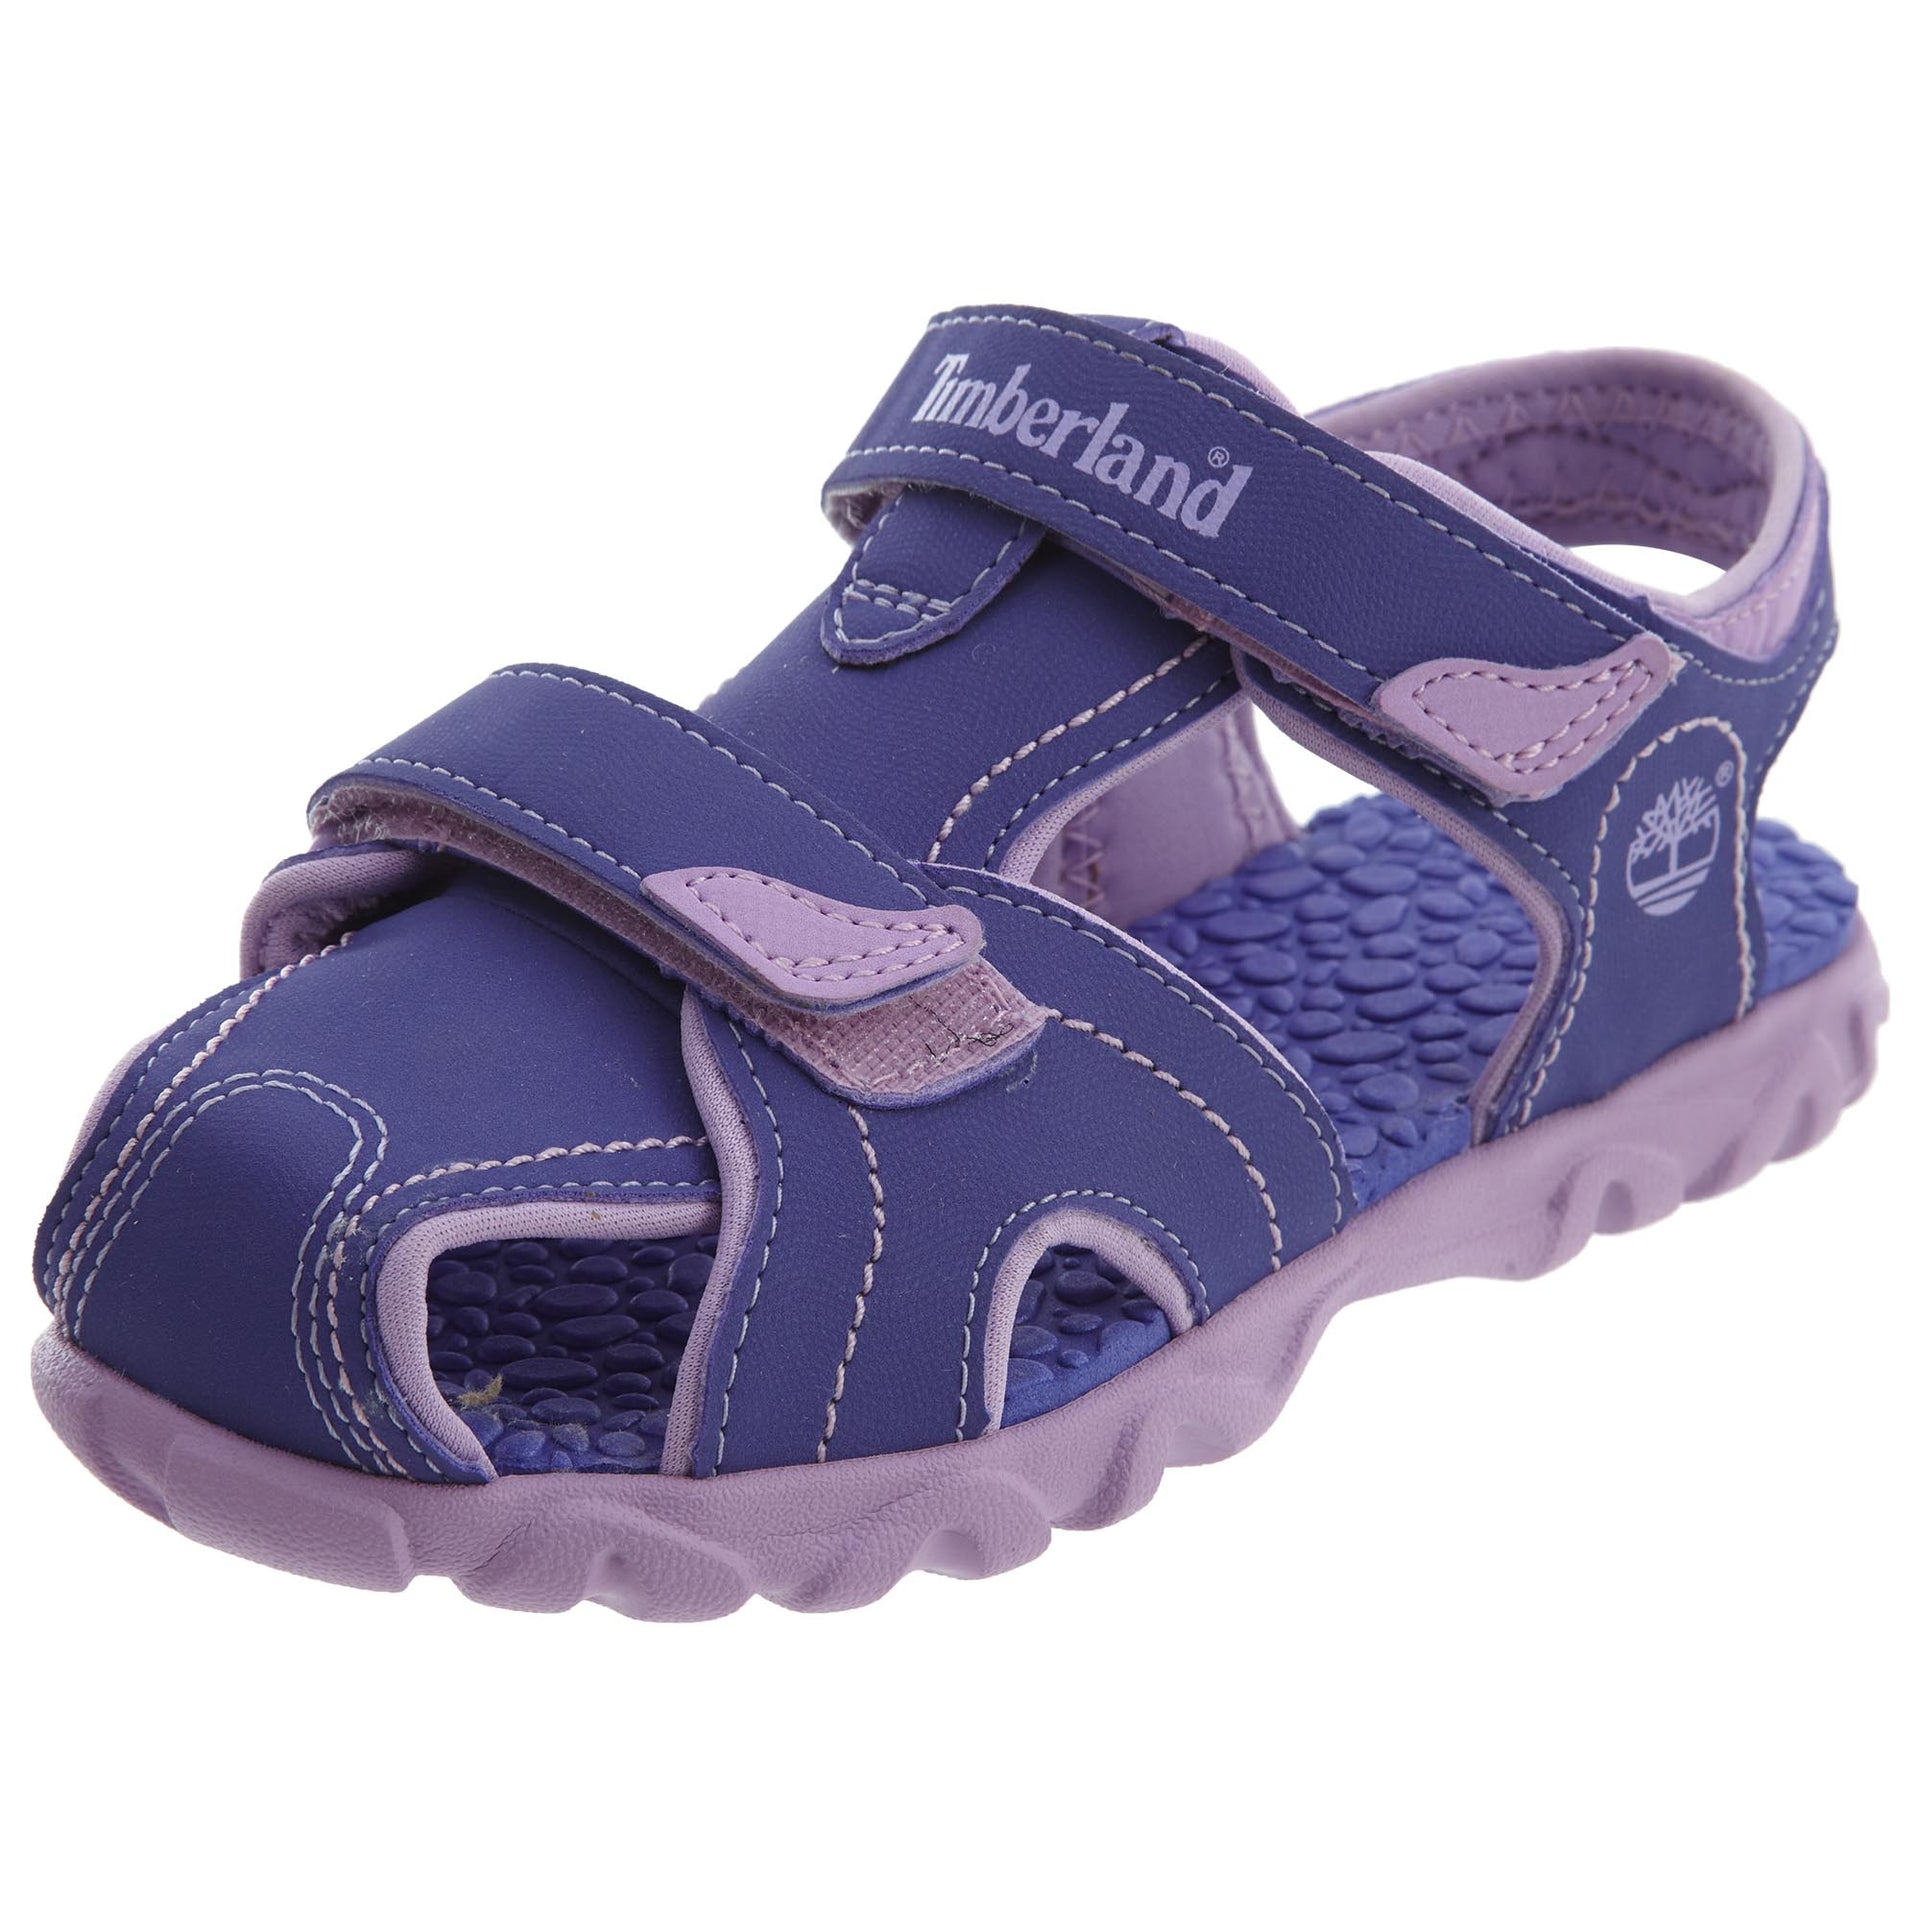 Timberland Splashtown Closed Toe Sandal Little Kids Style : 7872r